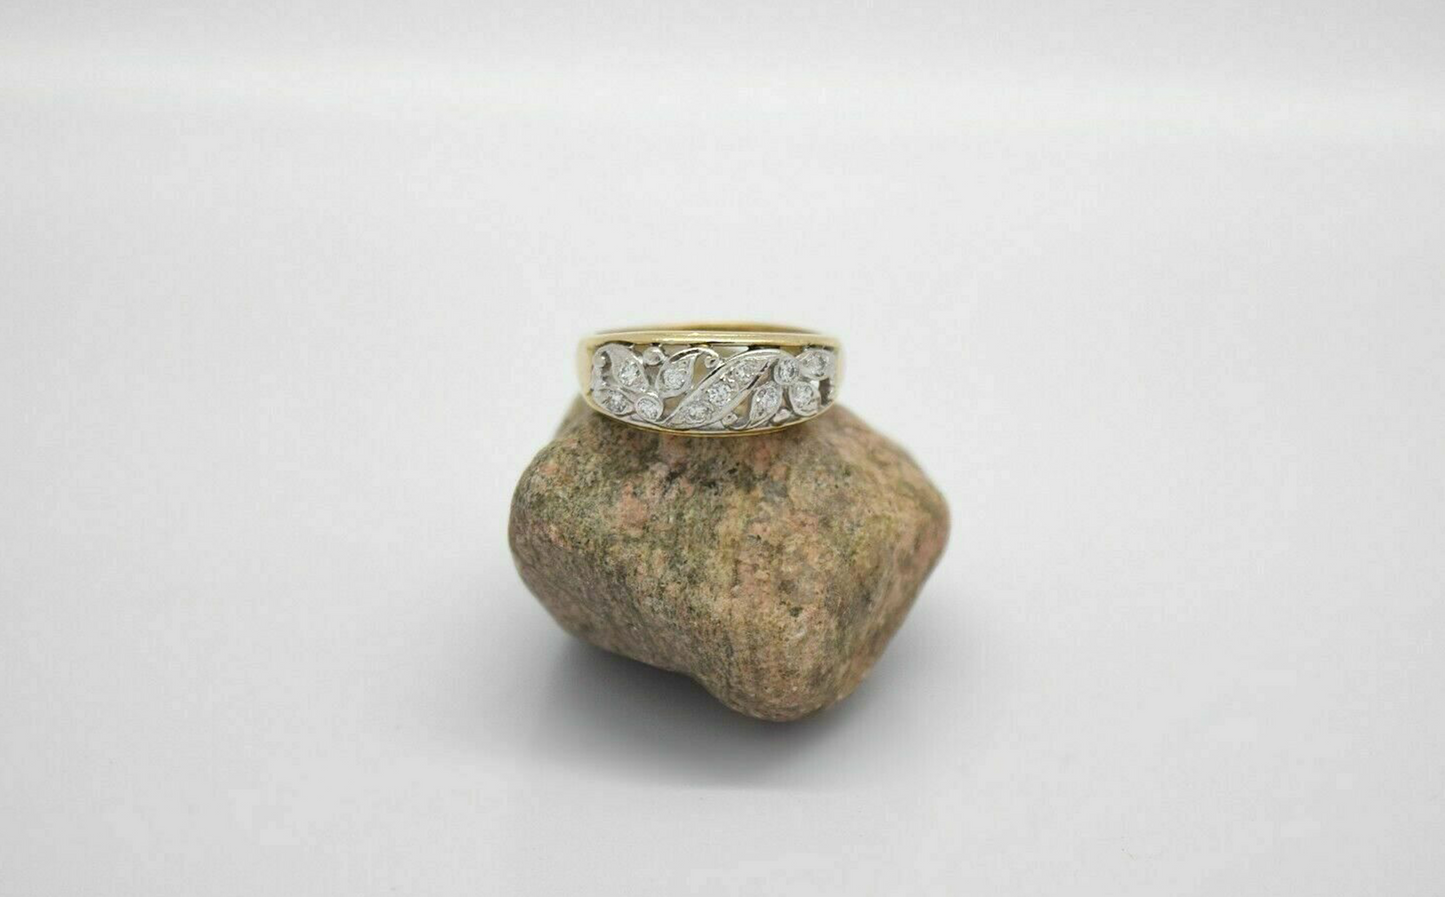 14k Yellow Gold Ladies Diamond Ring, Size 6.5 - 3.6g